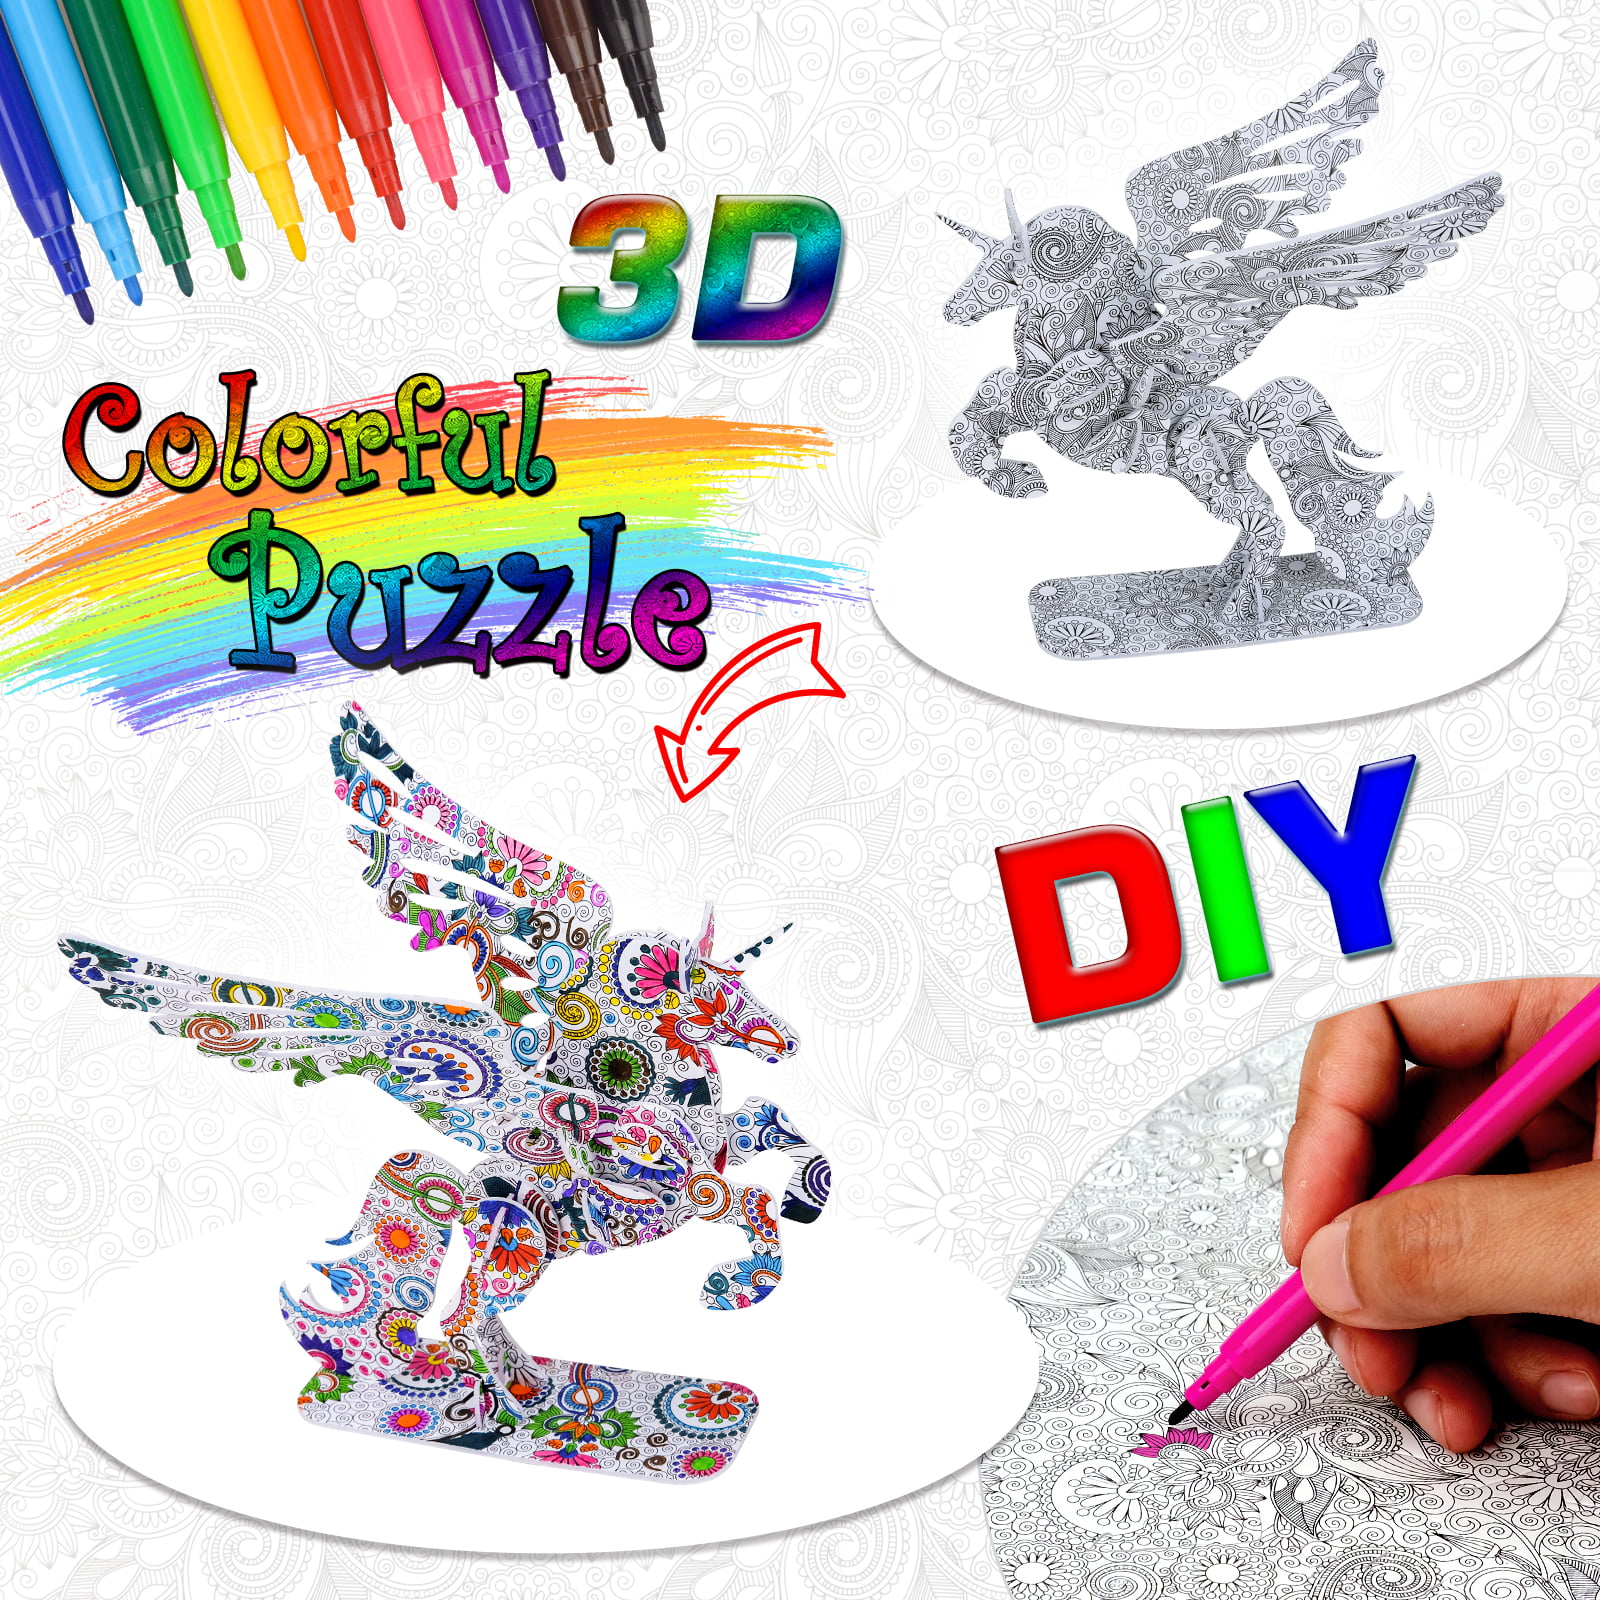 Rainbow Dreams 3D Coloring Set : Bring Images to Life - Exit9 Gift Emporium